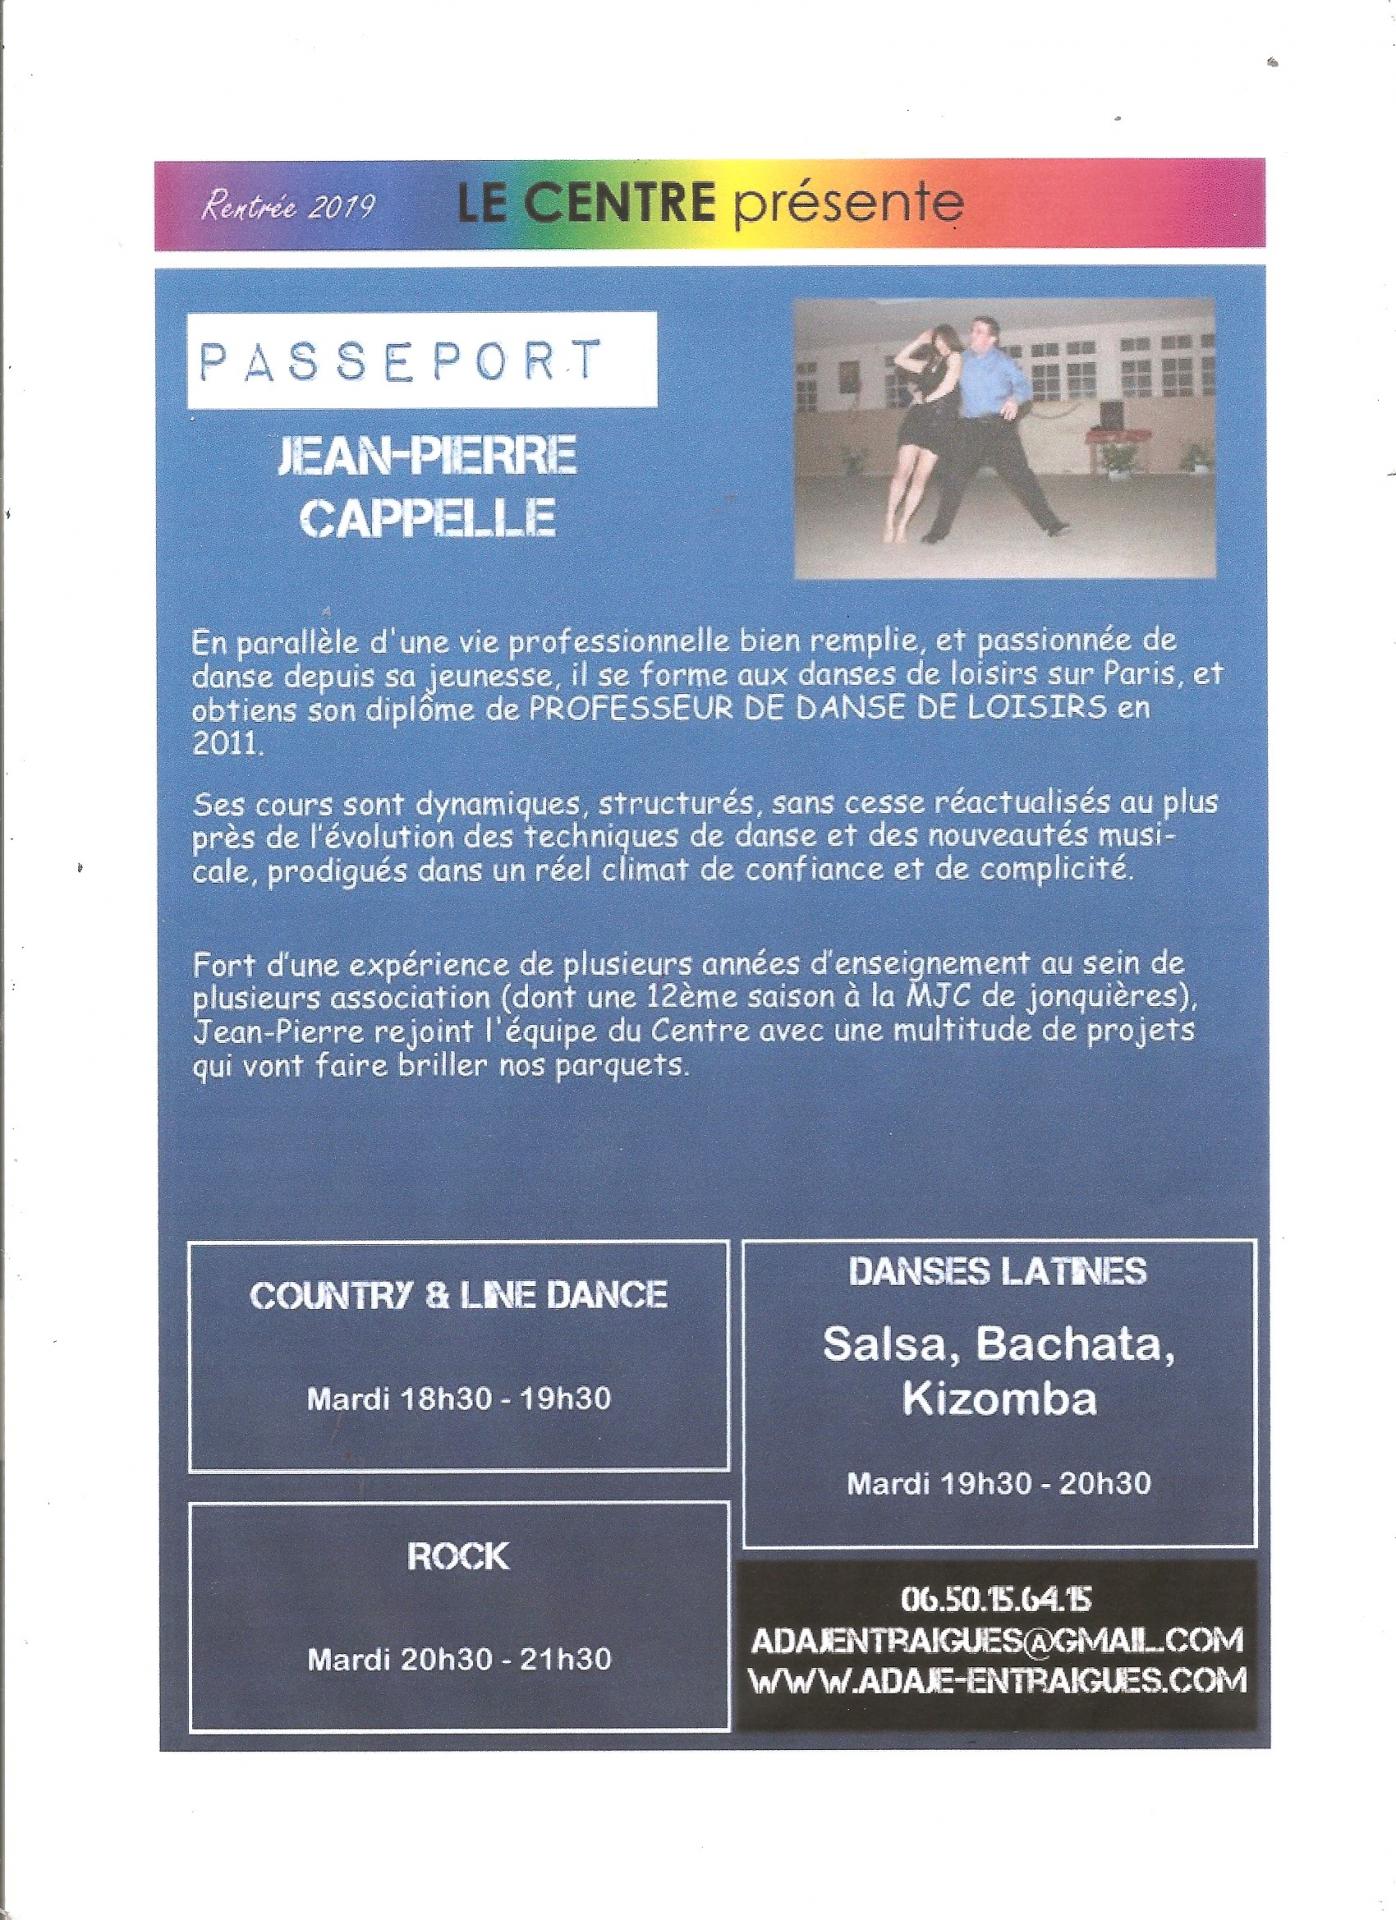 Passeport Jean-Pierre Cappelle